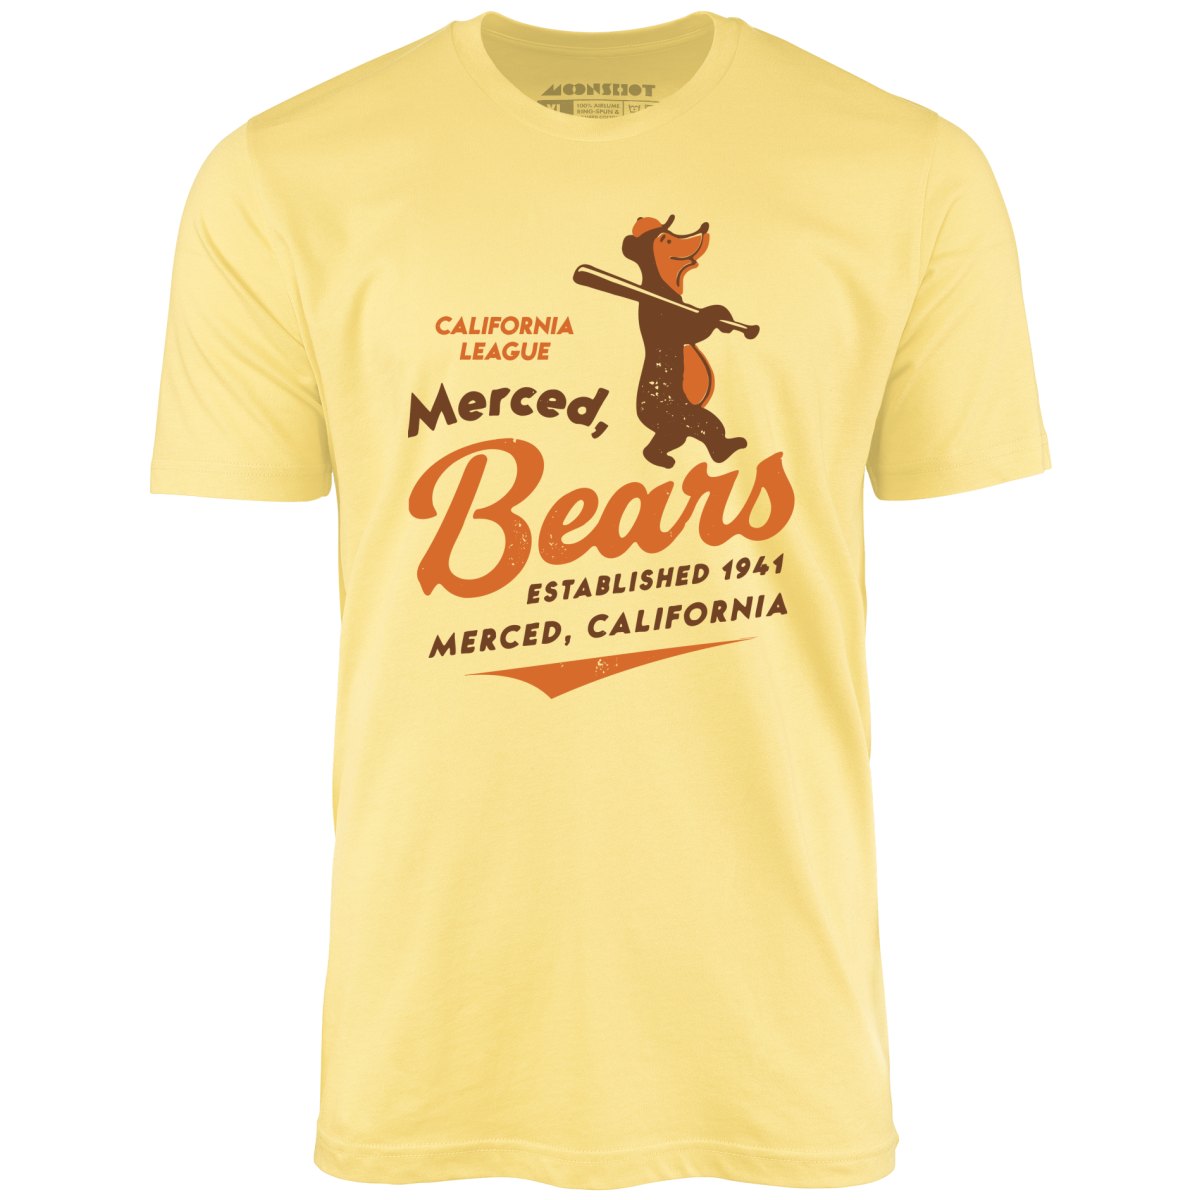 Merced Bears - California - Vintage Defunct Baseball Teams - Unisex T-Shirt